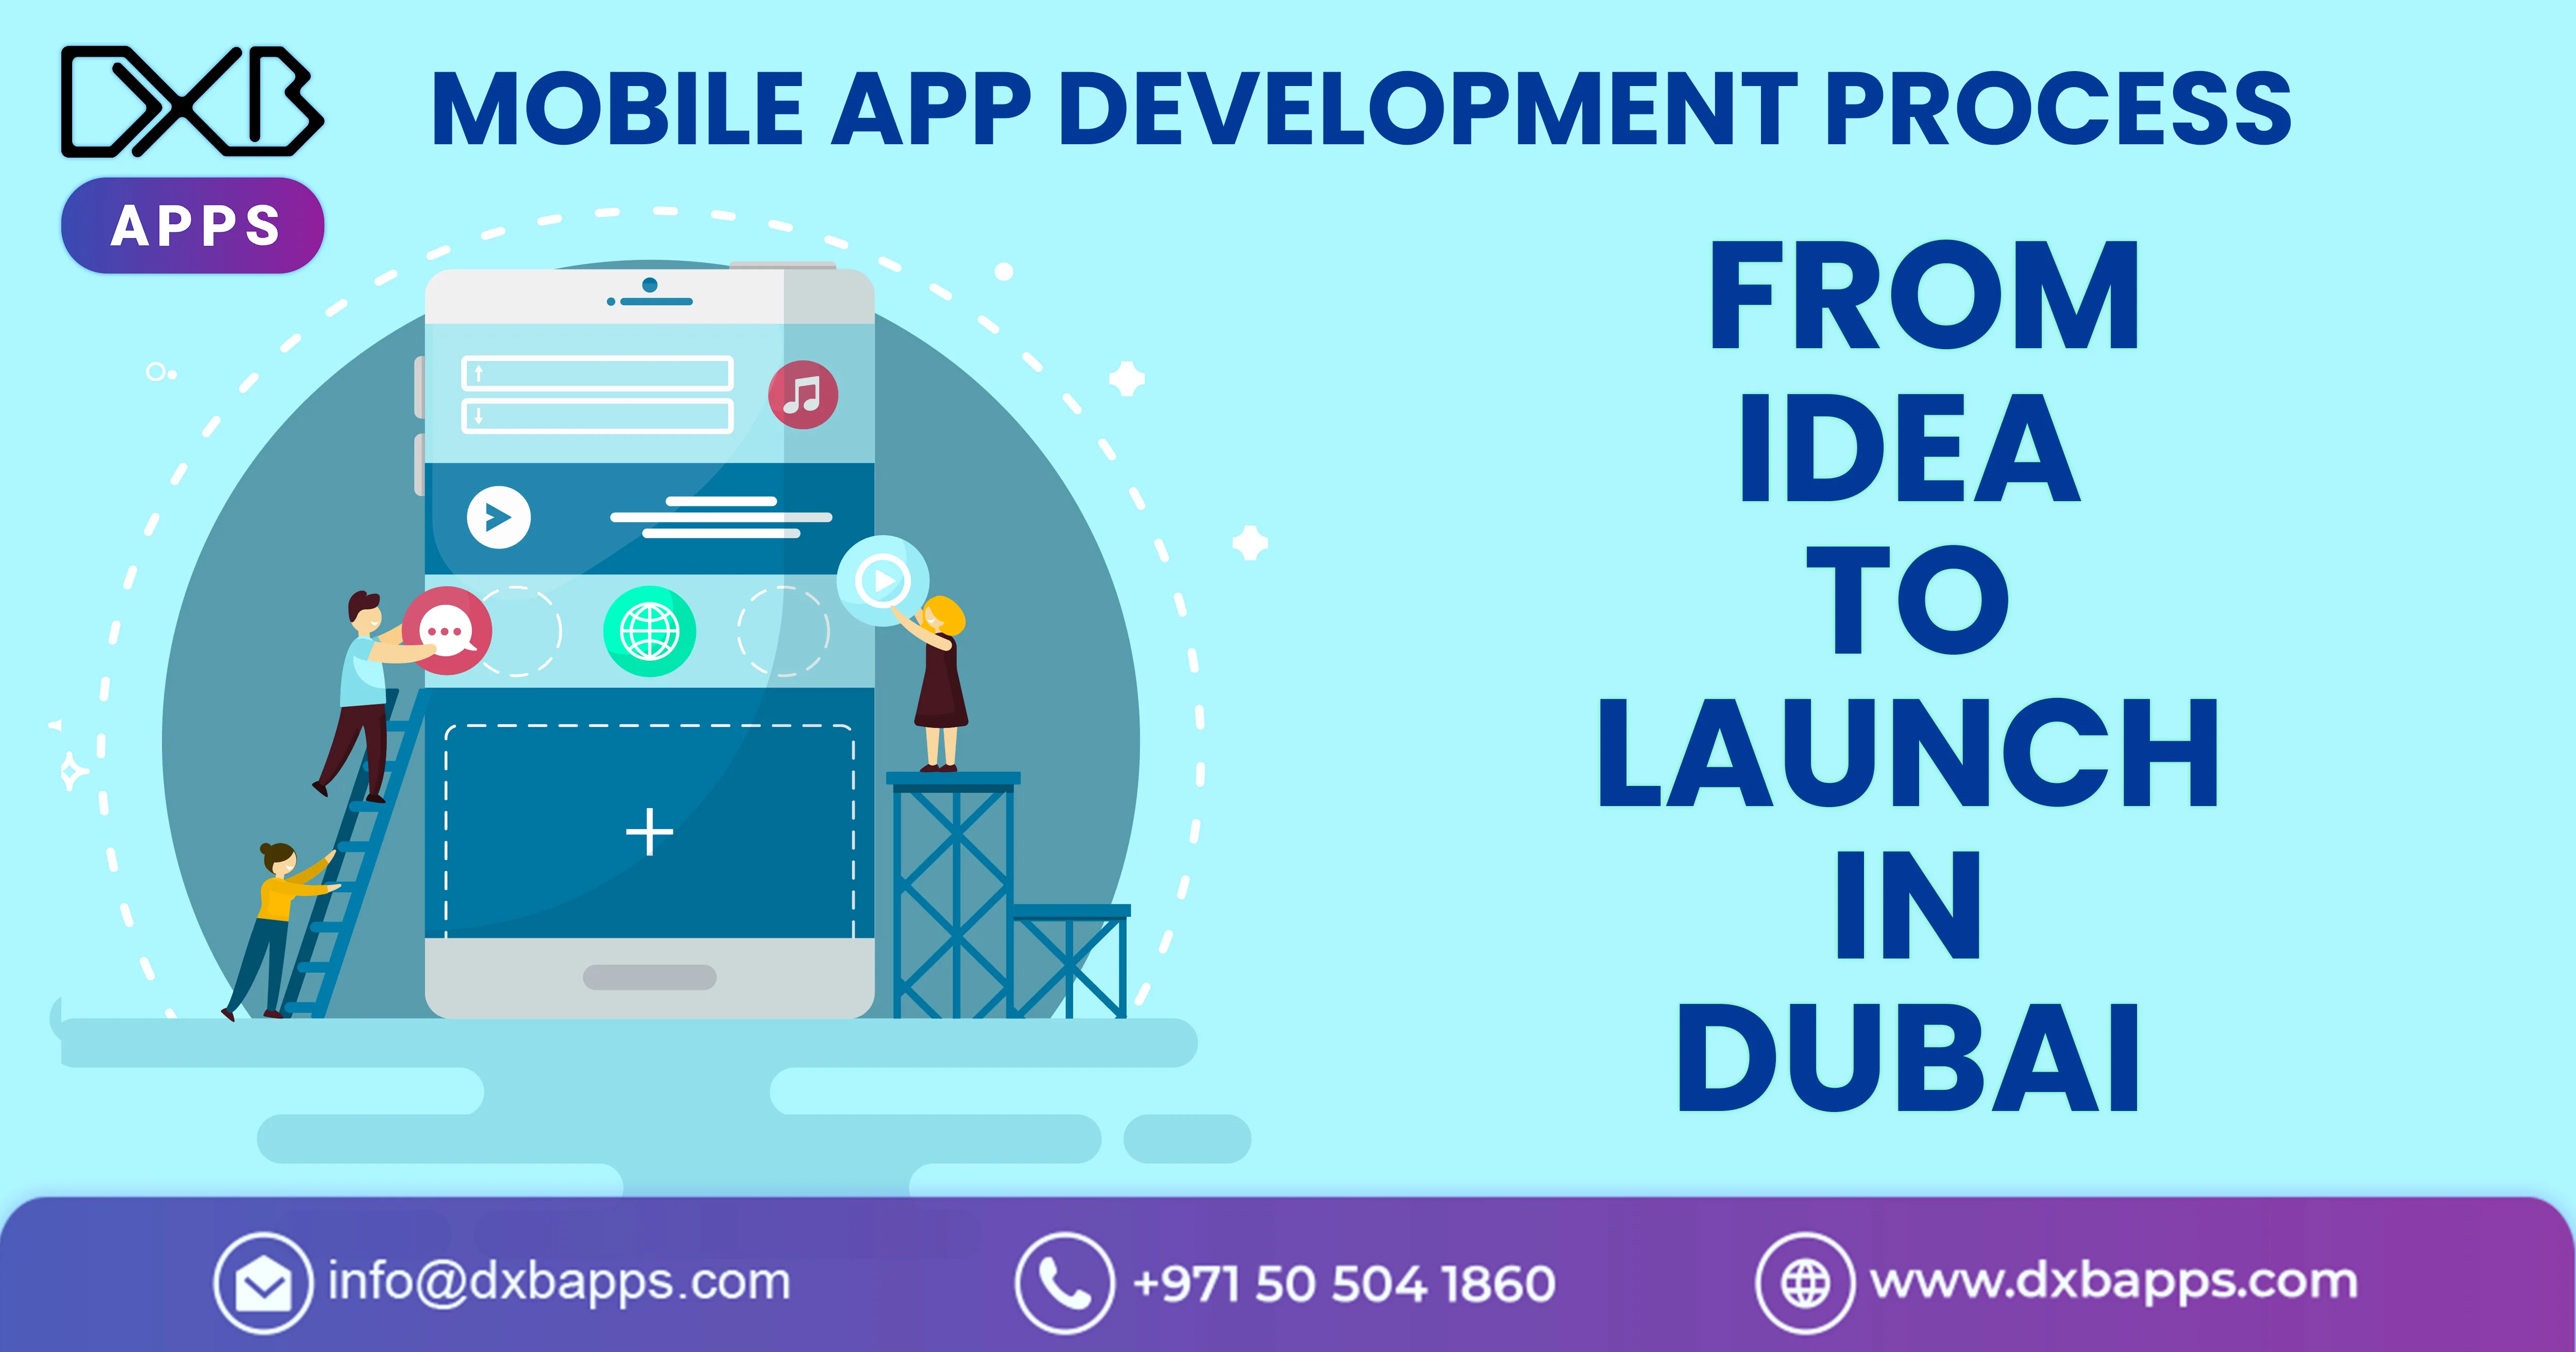 Mobile App Development Process: From Idea to Launch in Dubai